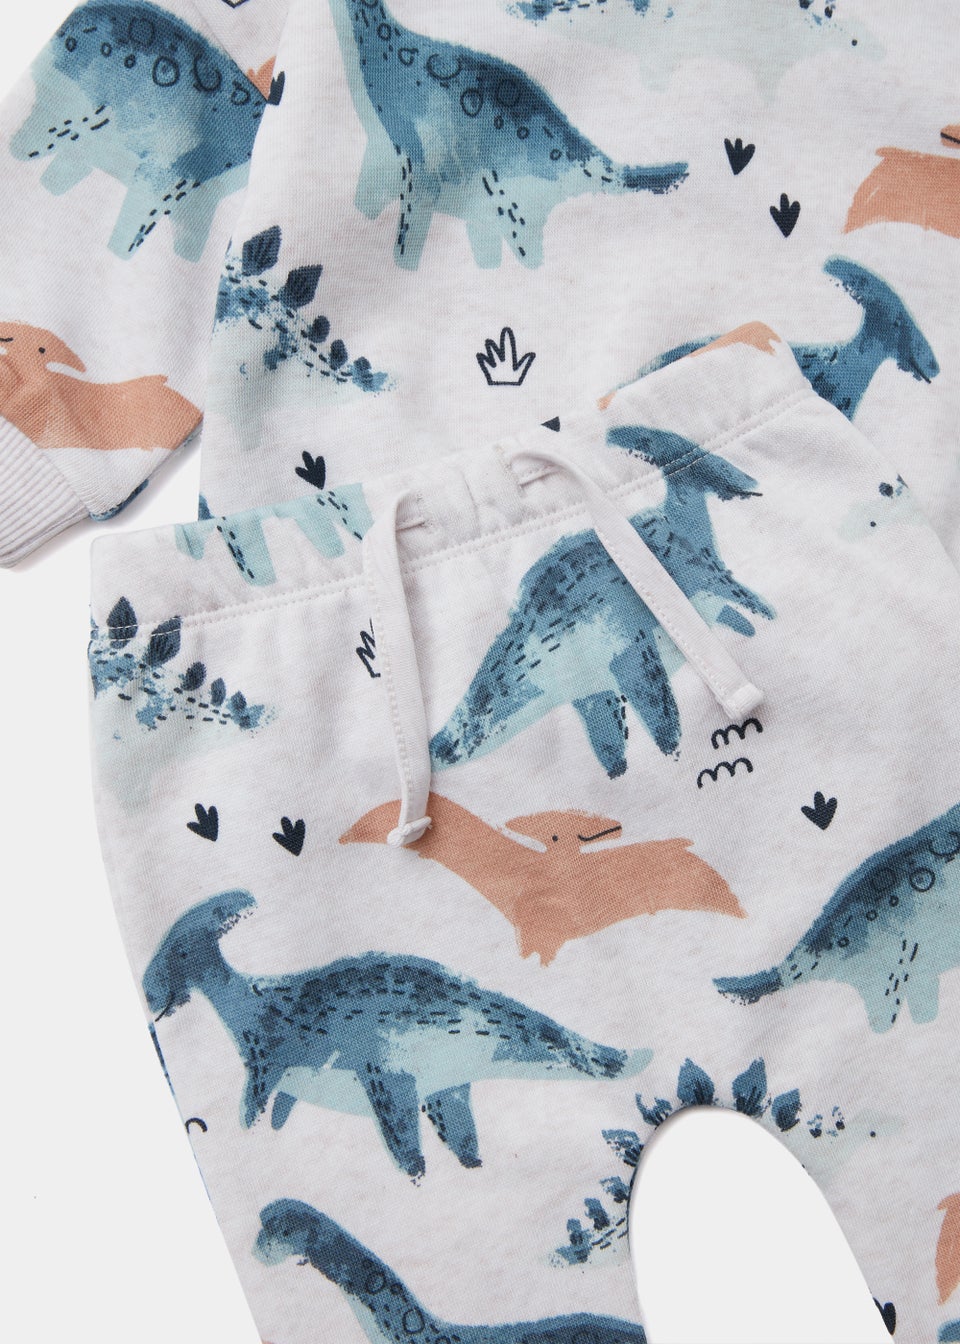 Baby Oatmeal Dinosaur Sweatshirt & Joggers Set (Newborn-23mths)